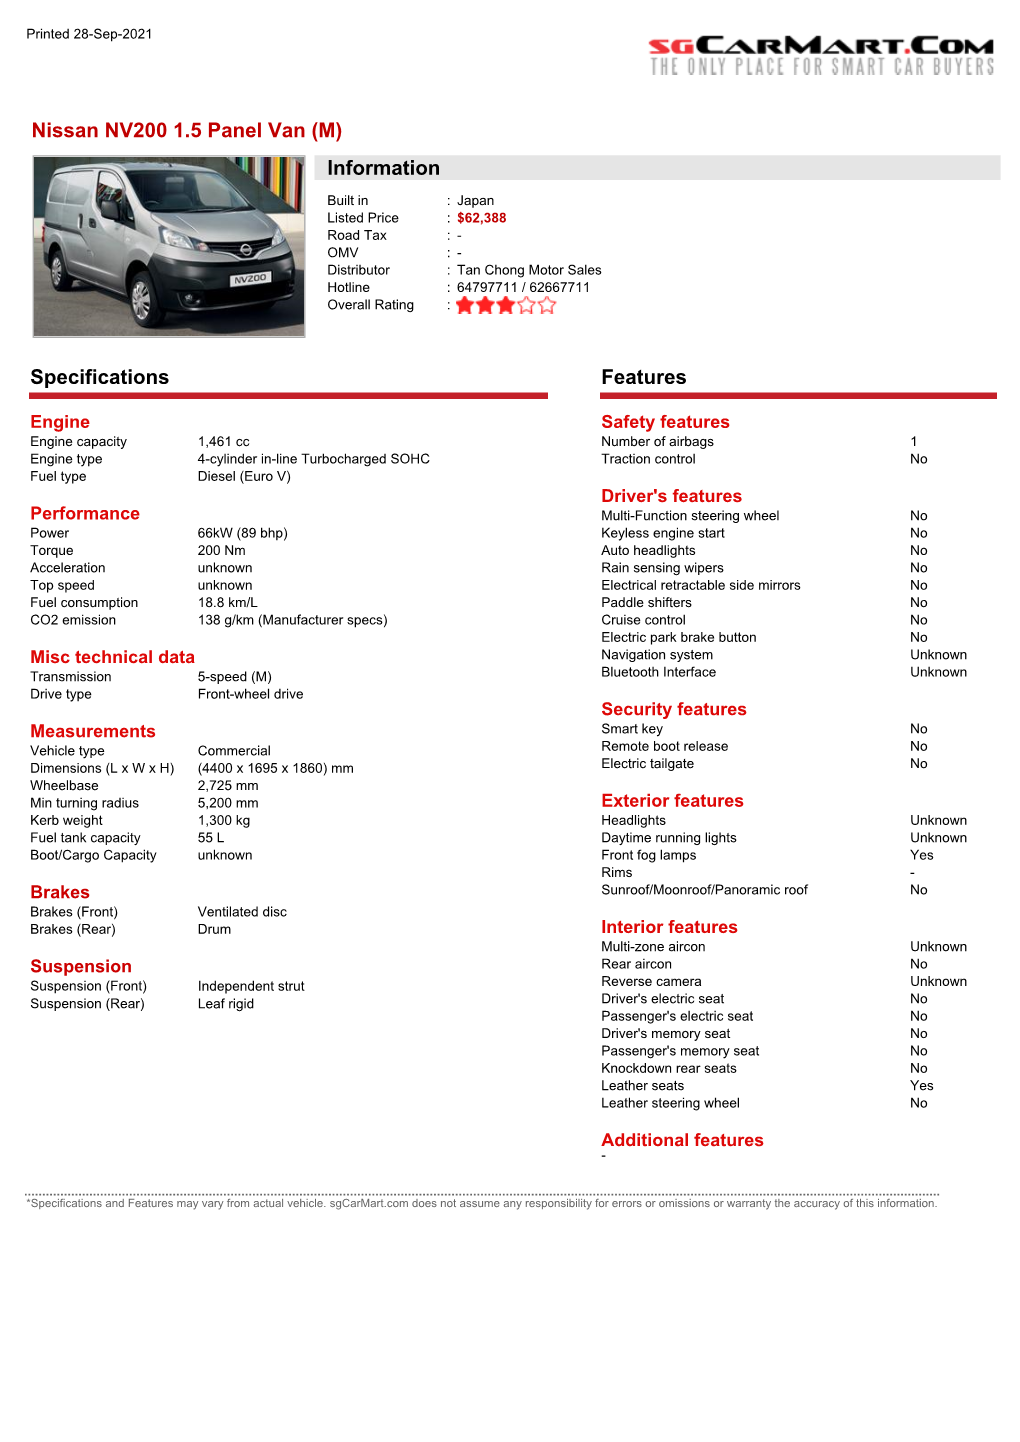 Nissan NV200 1.5 Panel Van (M) Information